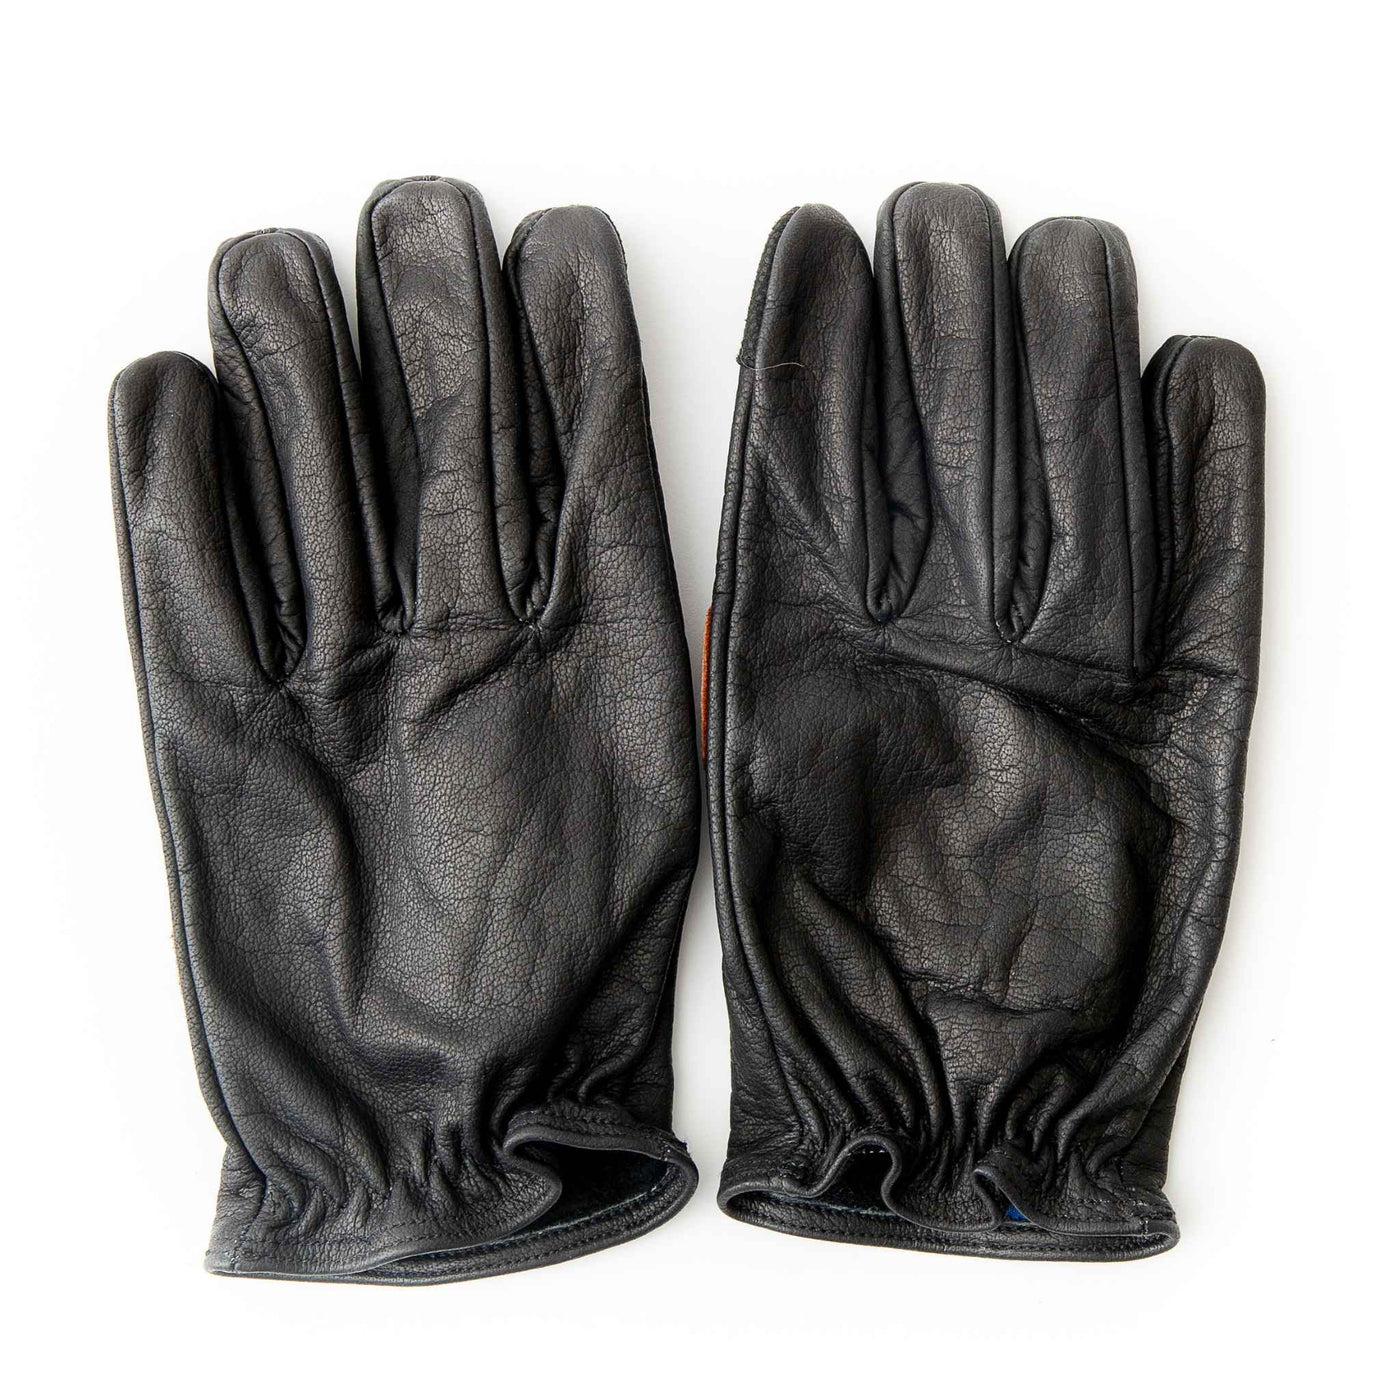 Buffalo Leather Motorcycle Gloves